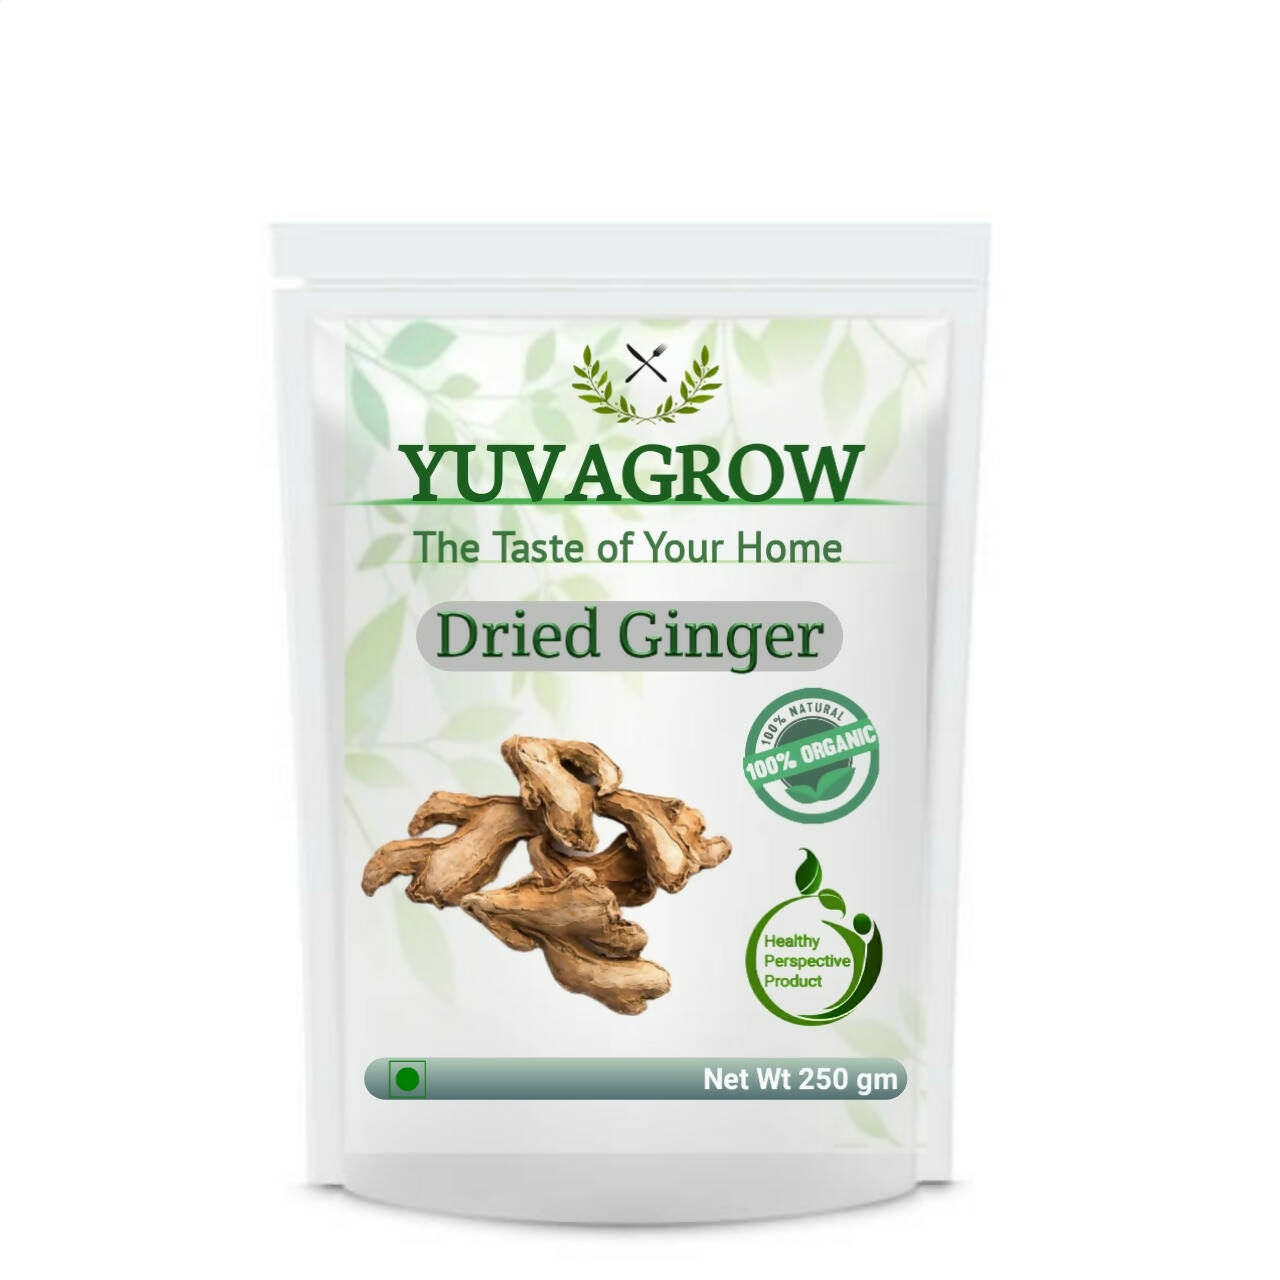 Yuvagrow Dried Ginger - buy in USA, Australia, Canada